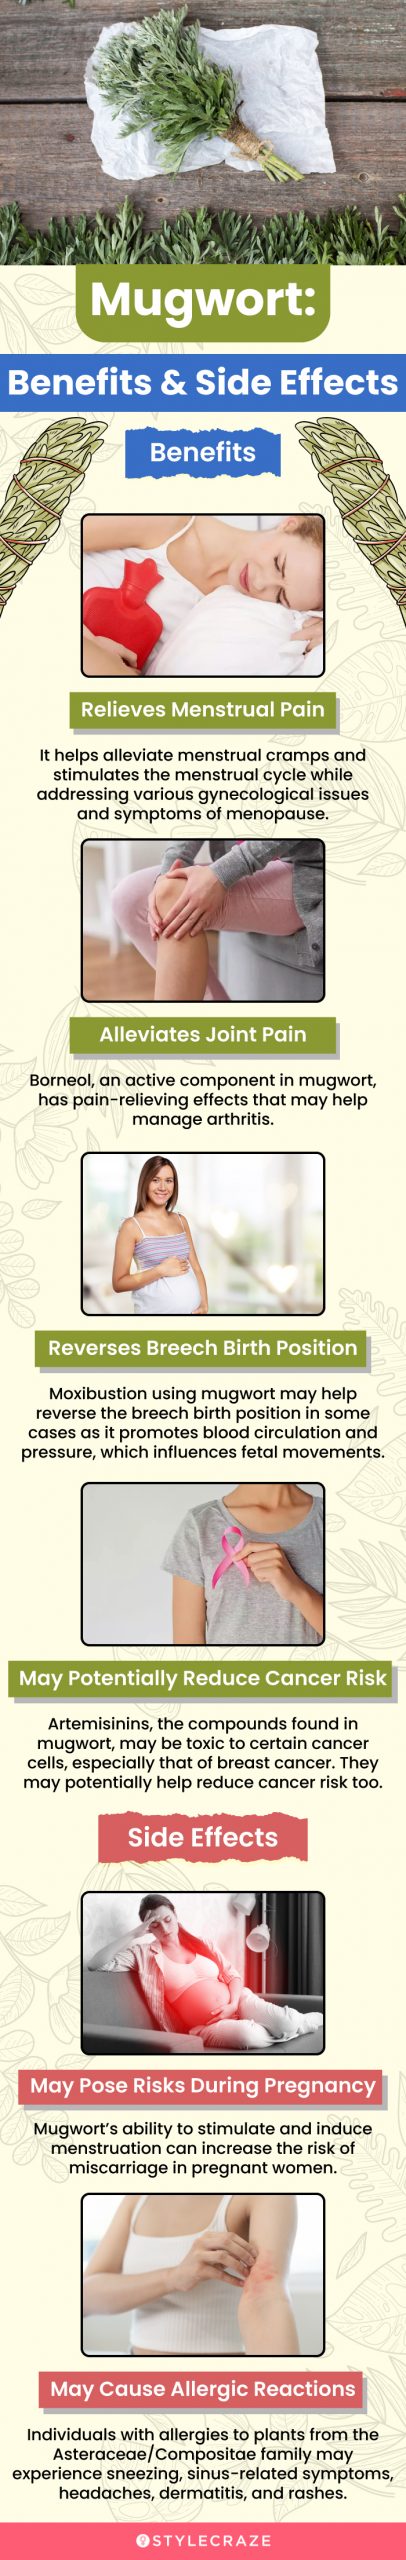 mugwort benefits & side effects (infographic)